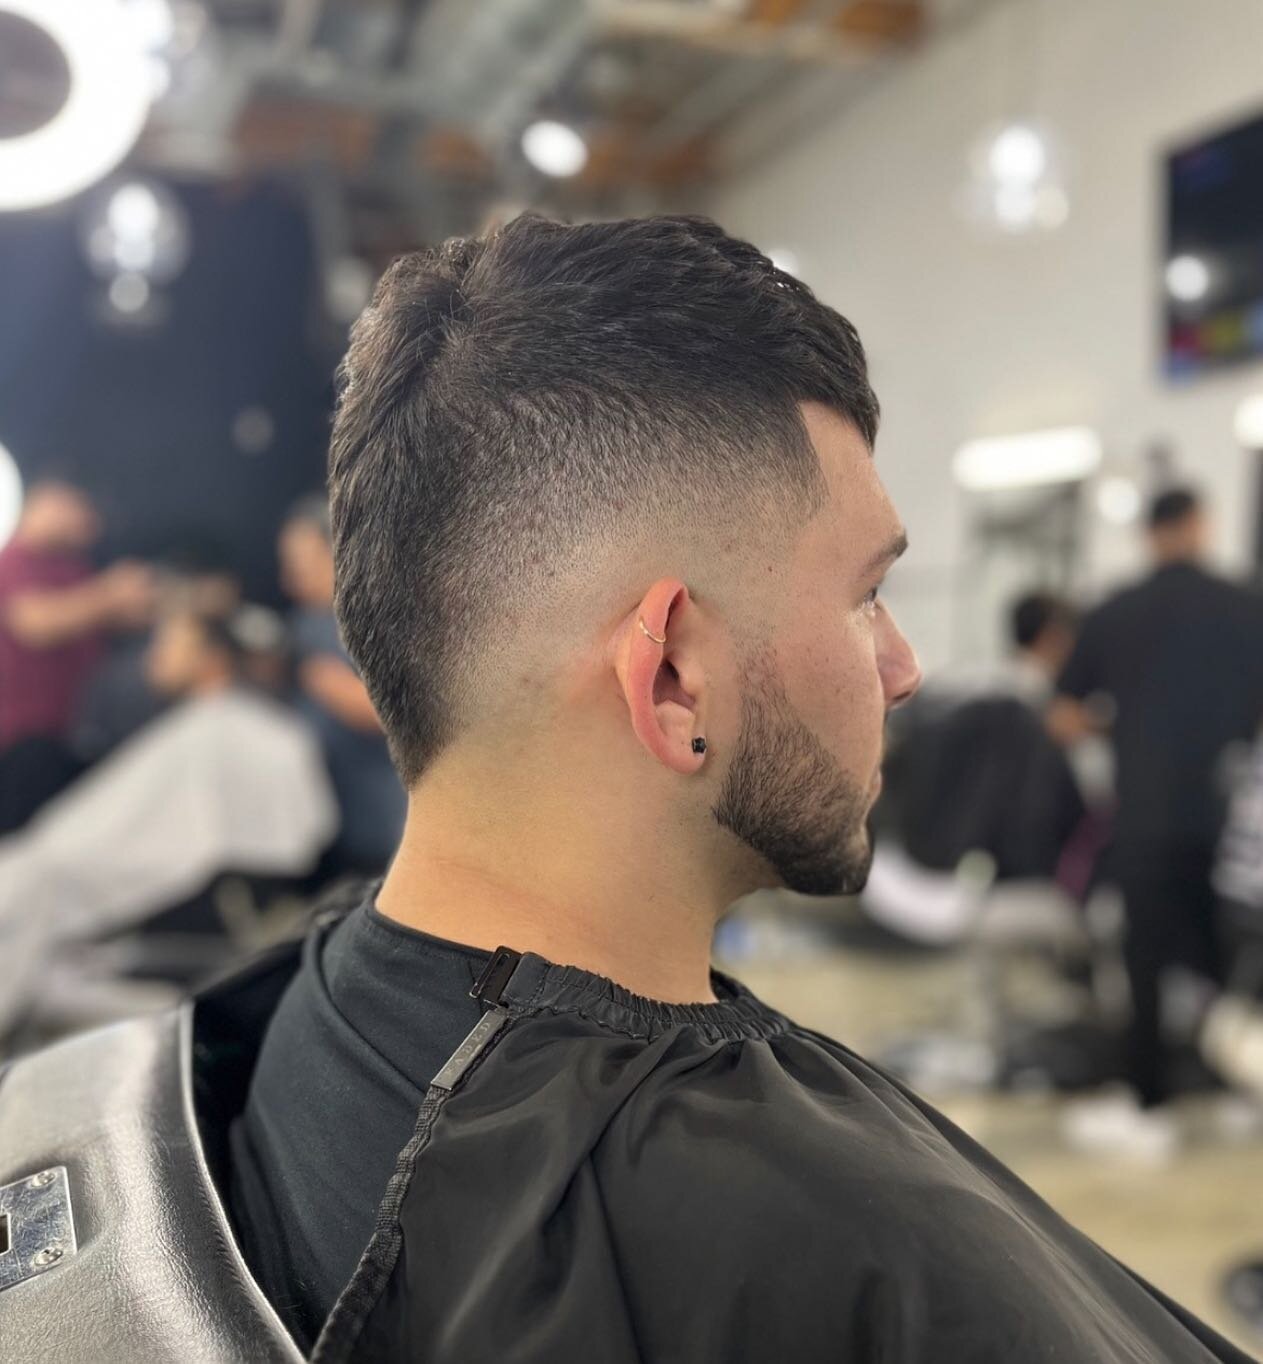 Haircut by @ara_te . Book your next appointment with him on the Fresha App!
.
.
.
.
.
.
.
.
.
#barbershop #glendale #losangeles #americana #buzzedbarbers #burbank #eaglerock #barbers #barber #lacanada #westhollywood #beverlyhills #silverlake #losfeli